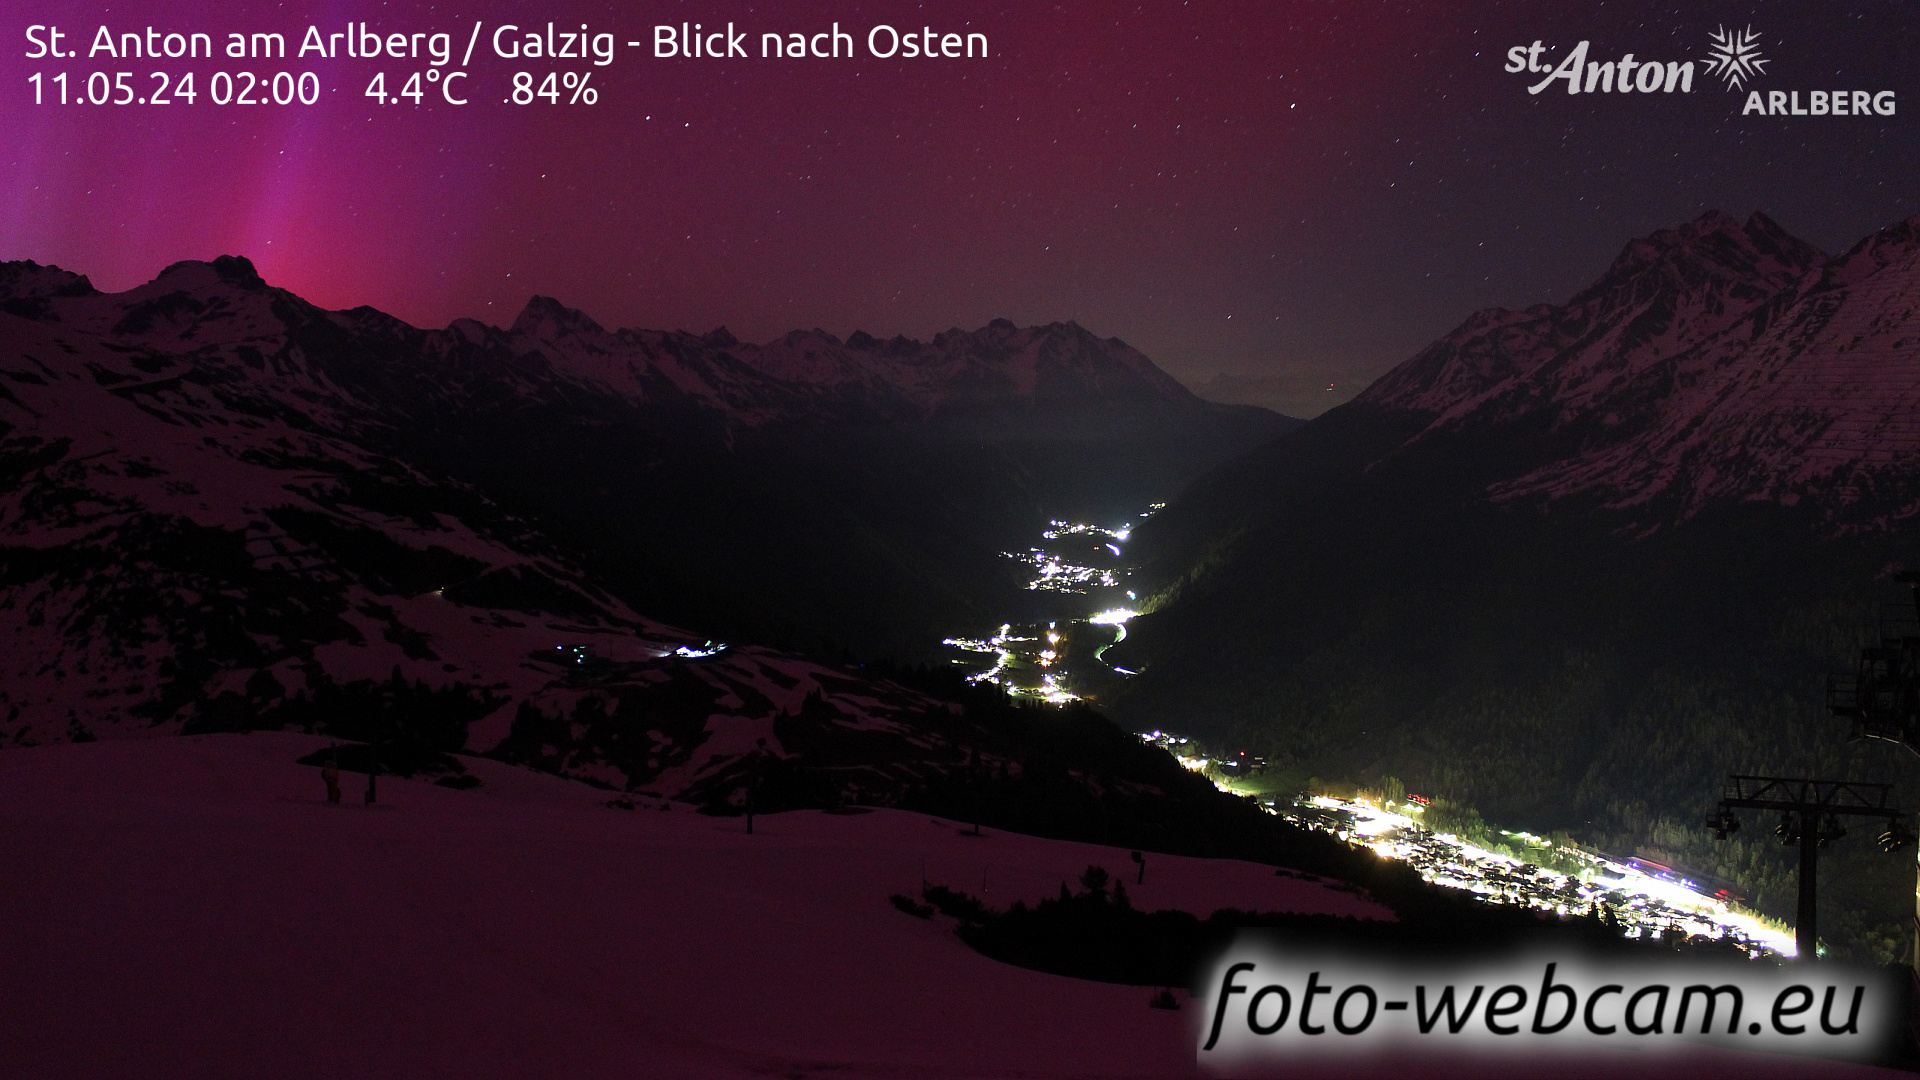 St. Anton am Arlberg Fri. 02:01